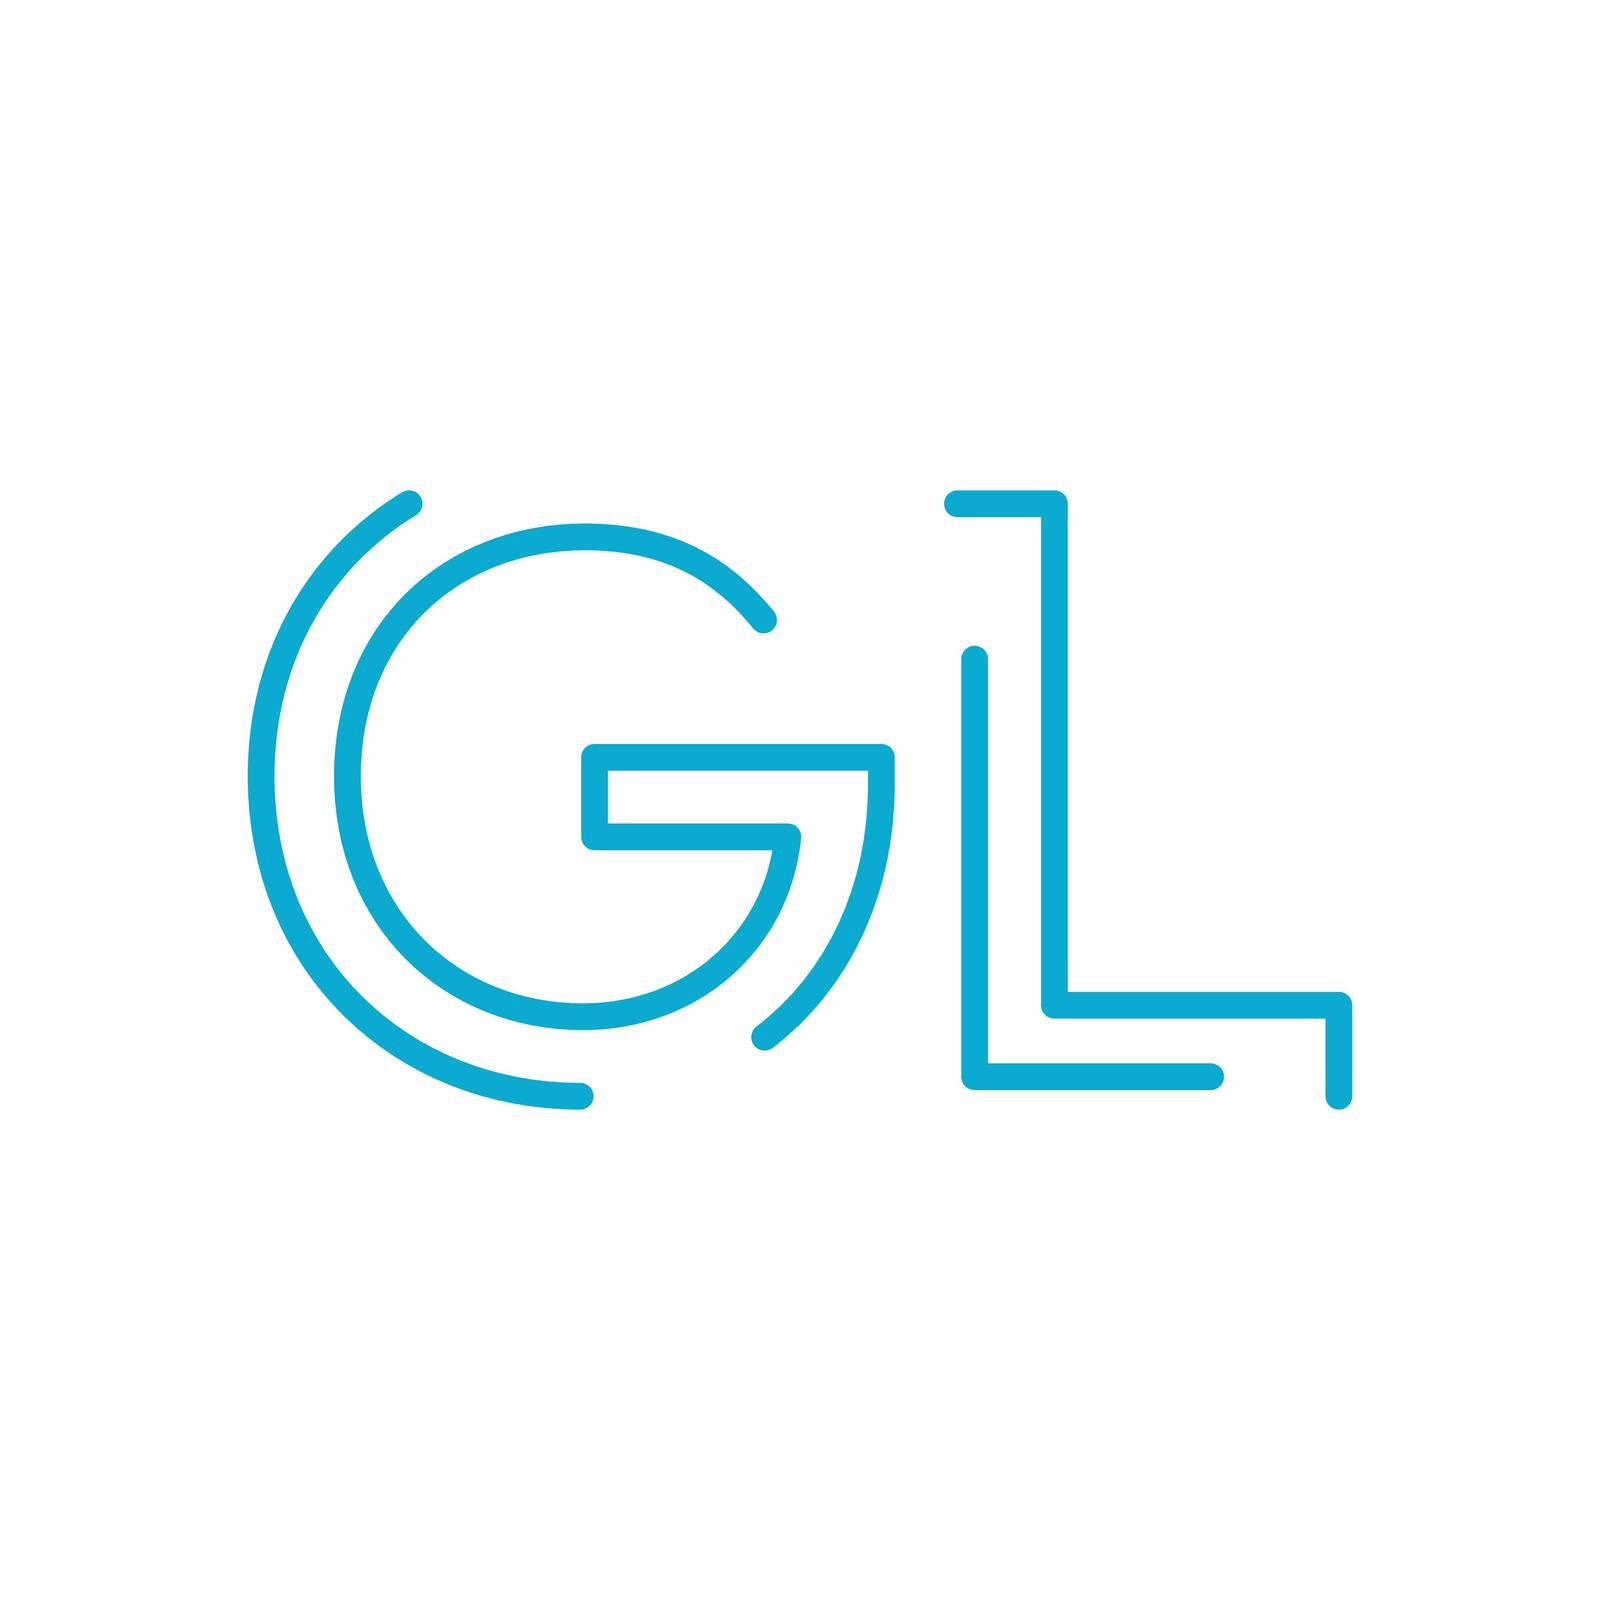 GL initial letter logo gl, lg, Blue graphic element for typography style, minimalistic letter design. Editable stroke. Stock vector illustration